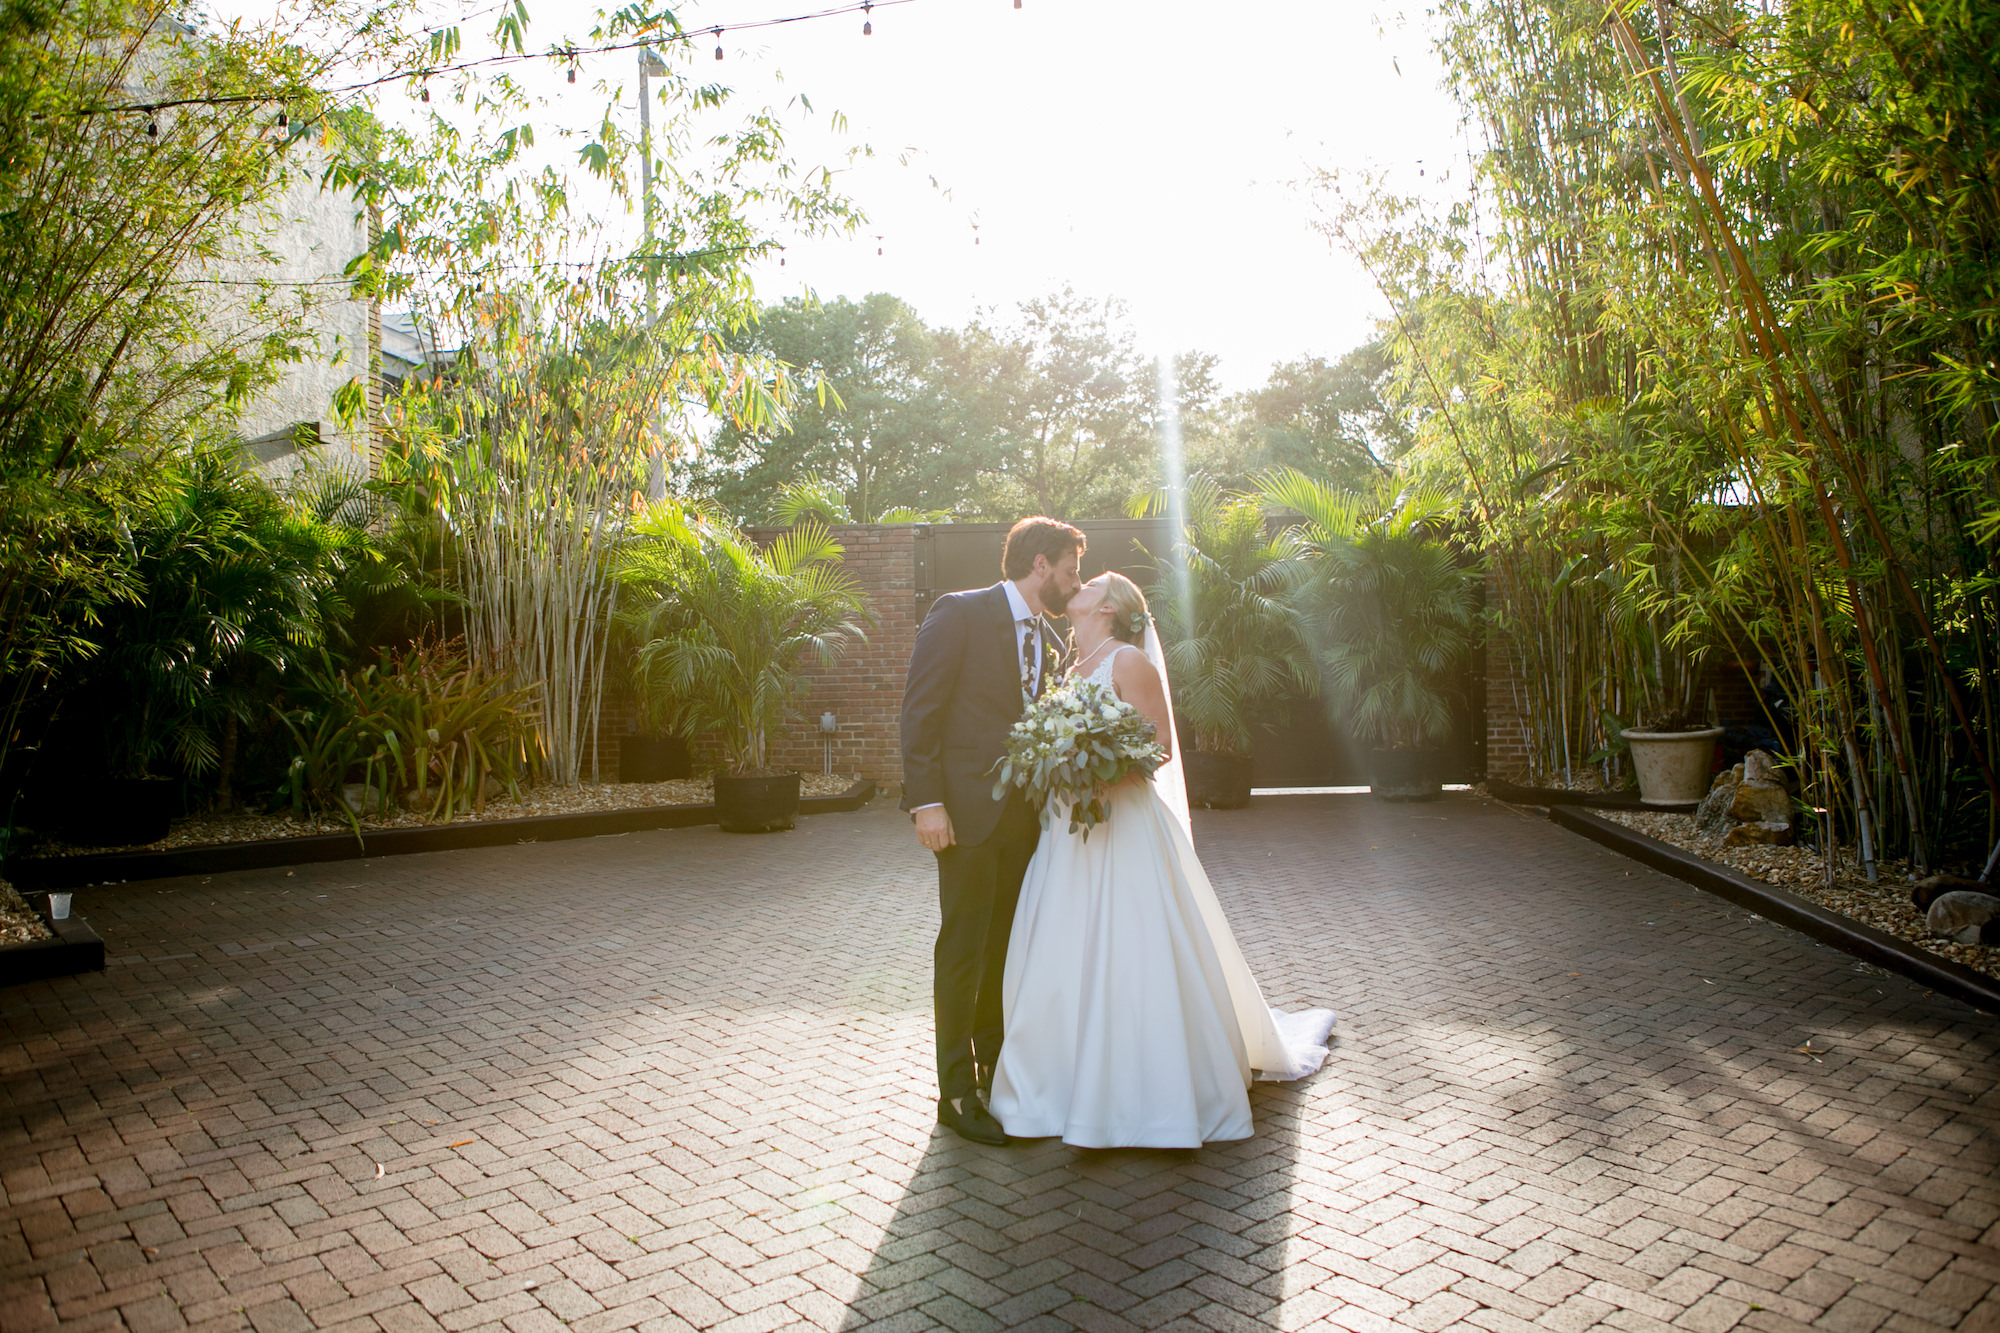 Sunset Bride and Groom Wedding Portrait | St Pete Photographer Carrie Wildes Photography | Venue NOVA 535